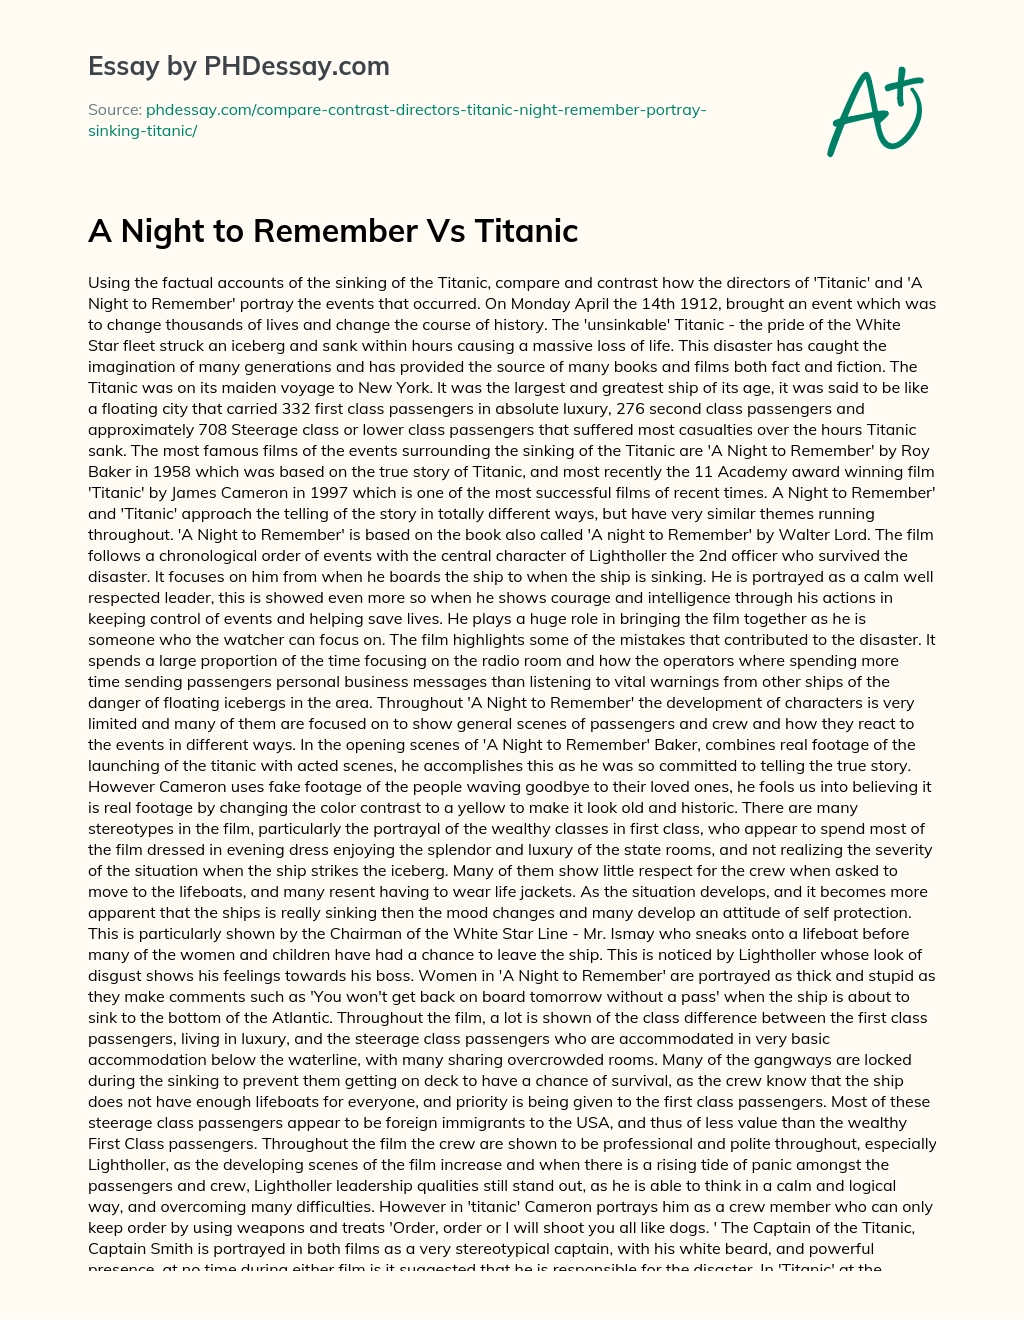 A Night to Remember Vs Titanic essay